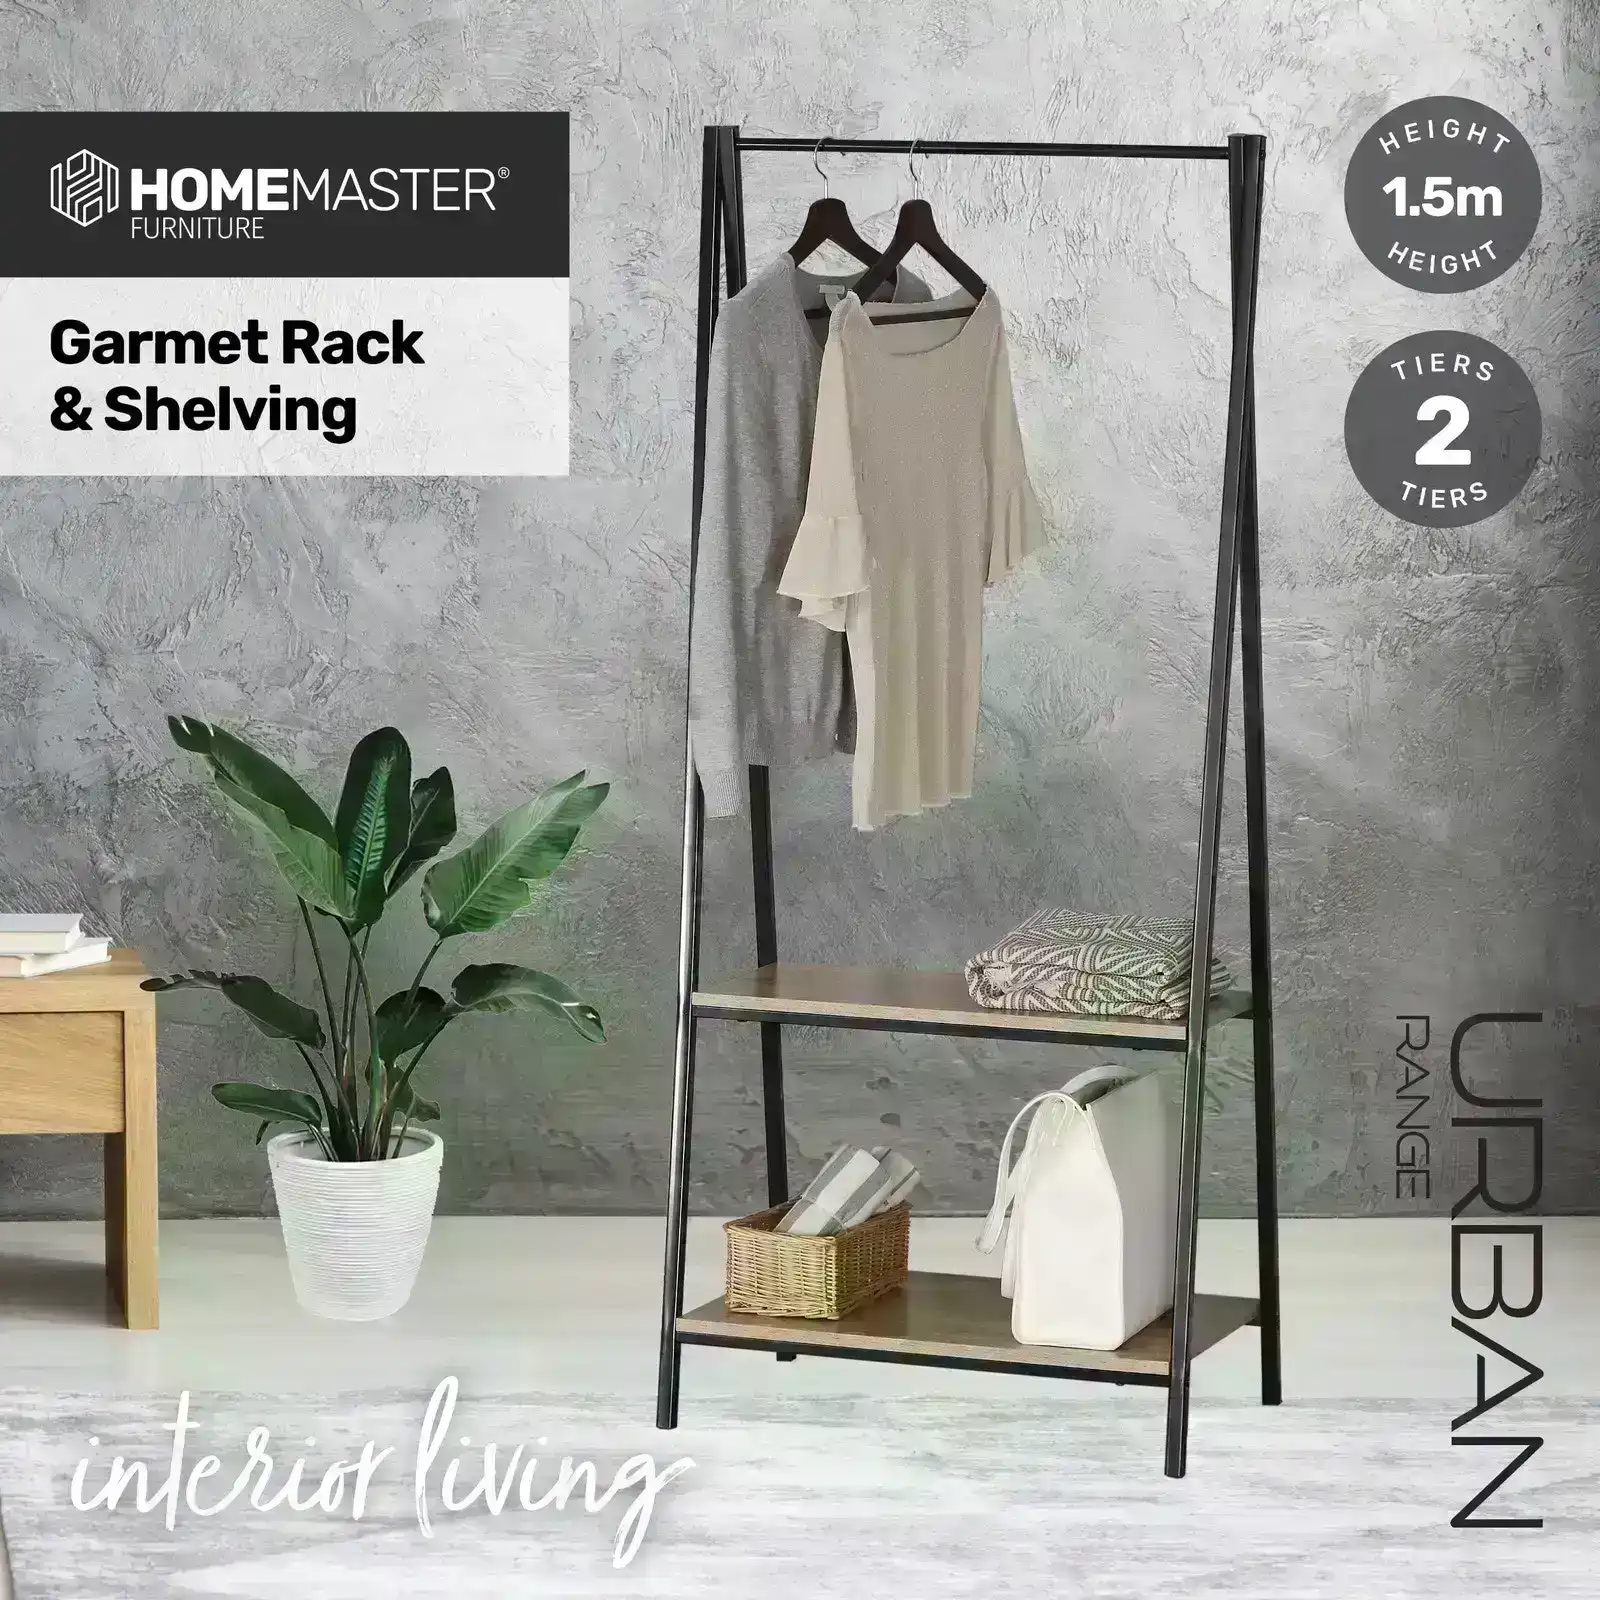 Home Master® Garment Rack & Shelving 2 Tier Sleek Stylish Modern Design 1.5m